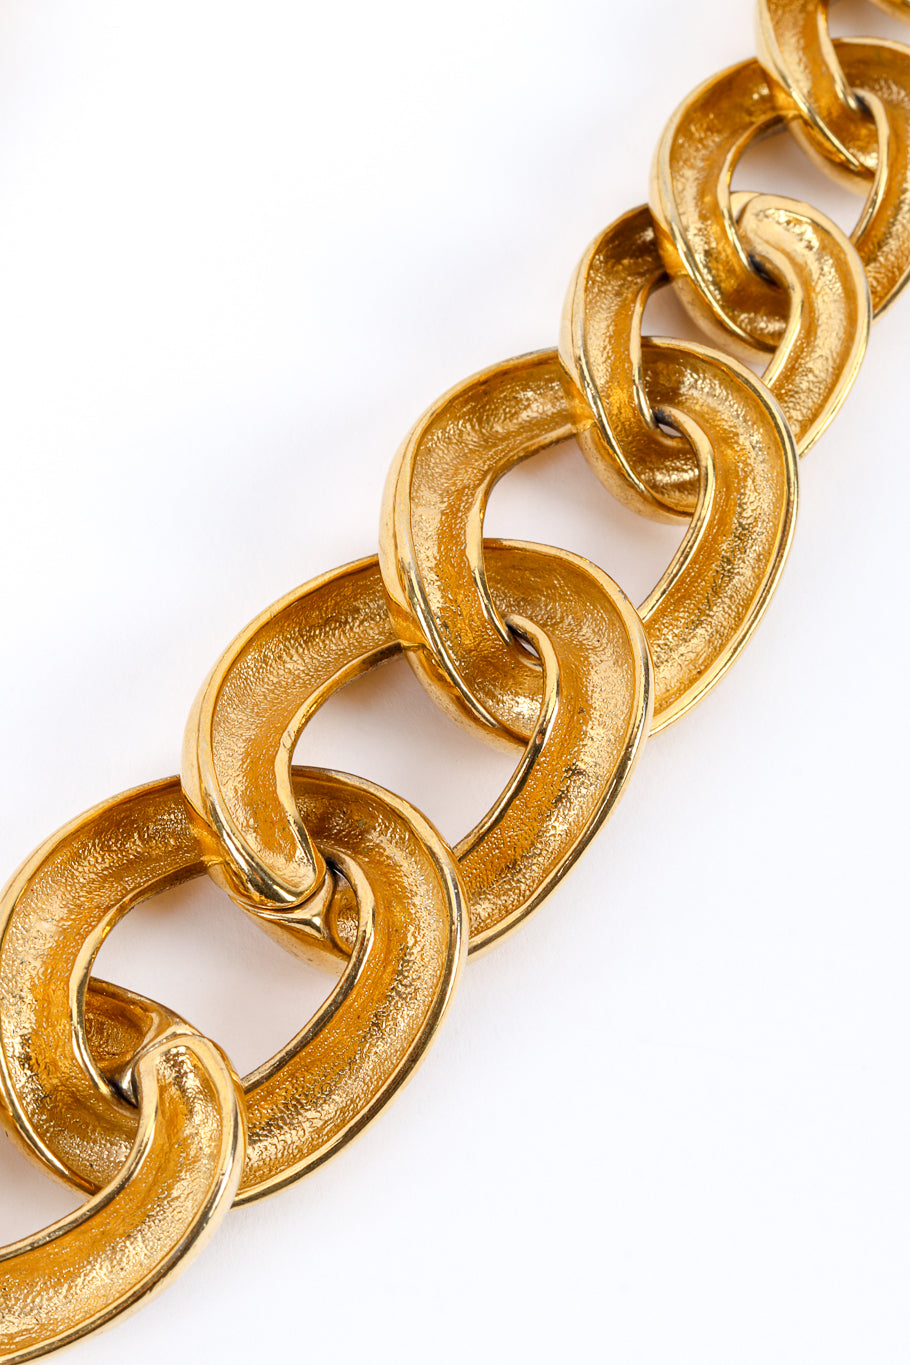 Vintage Givenchy Chunky Curb Link Necklace back link closeup @recessla